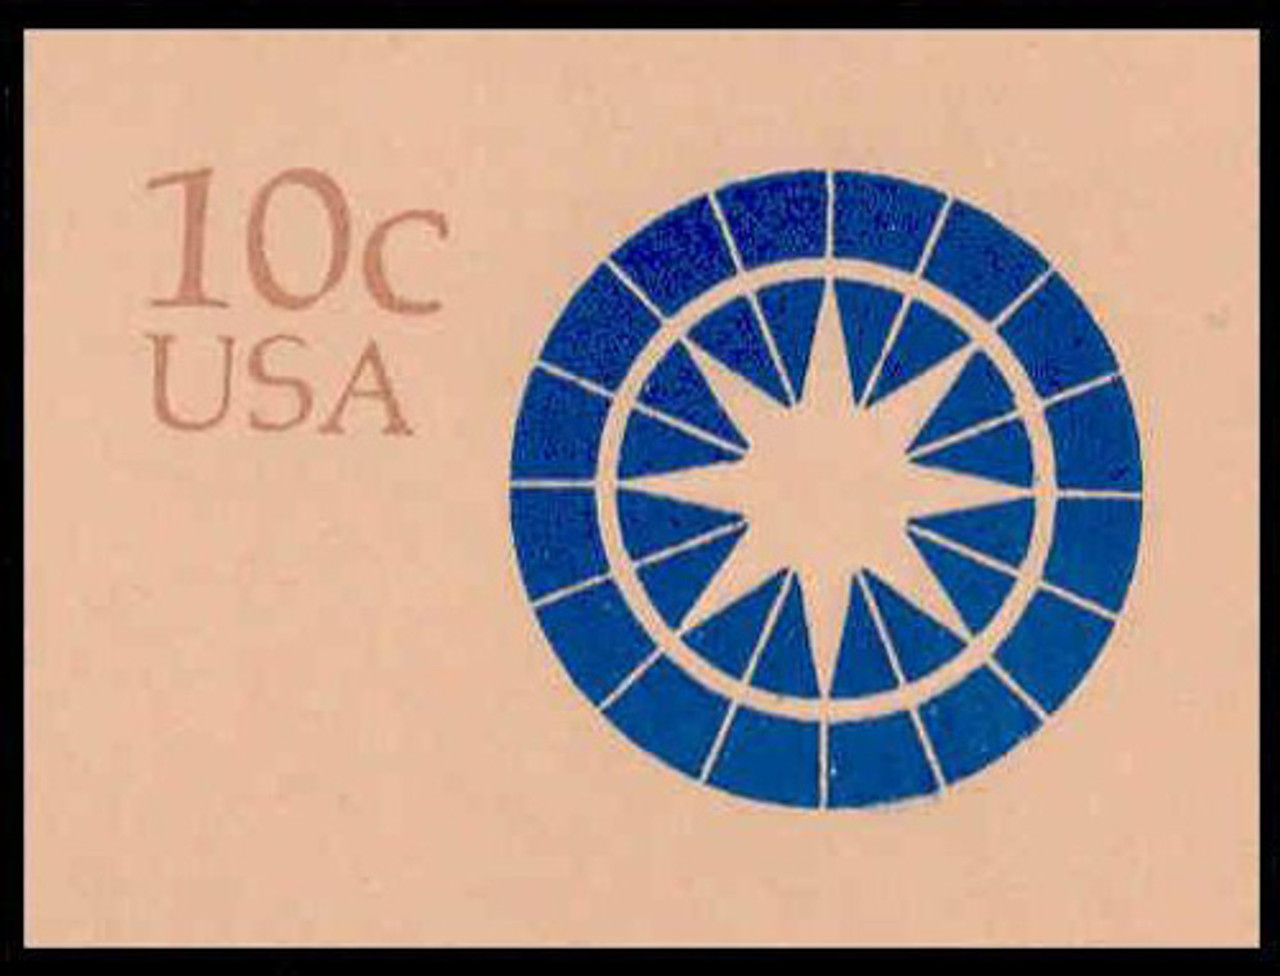 USA Scott # U 571 1975 10c Seafaring Tradition - Compass - Mint Cut Square